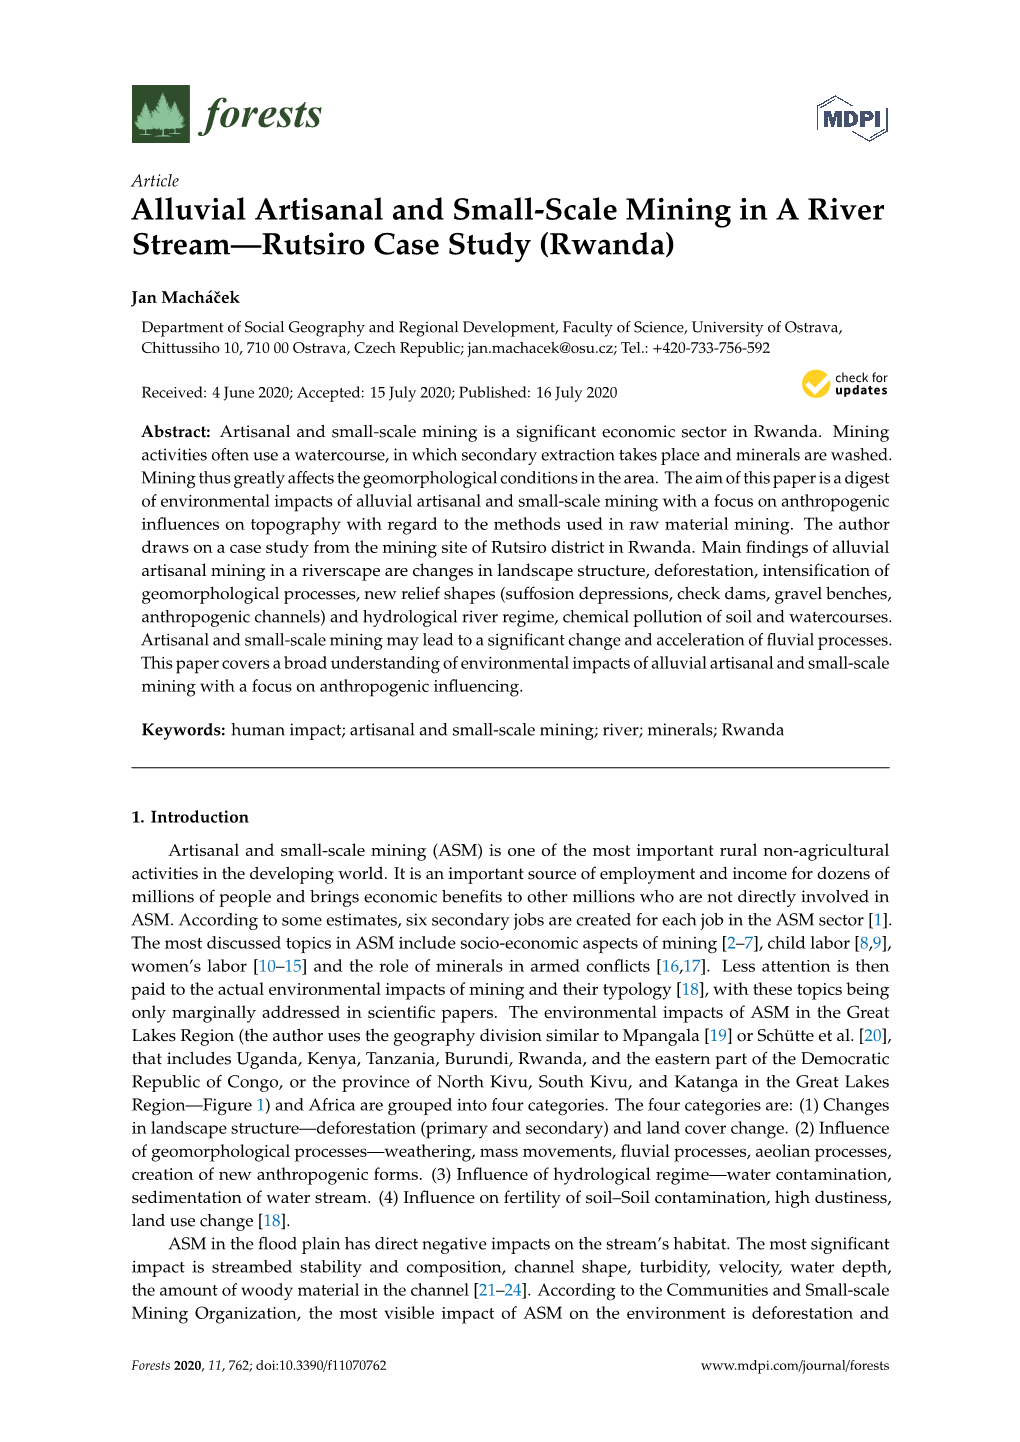 Alluvial Artisanal and Small-Scale Mining in a River Stream—Rutsiro Case Study (Rwanda)